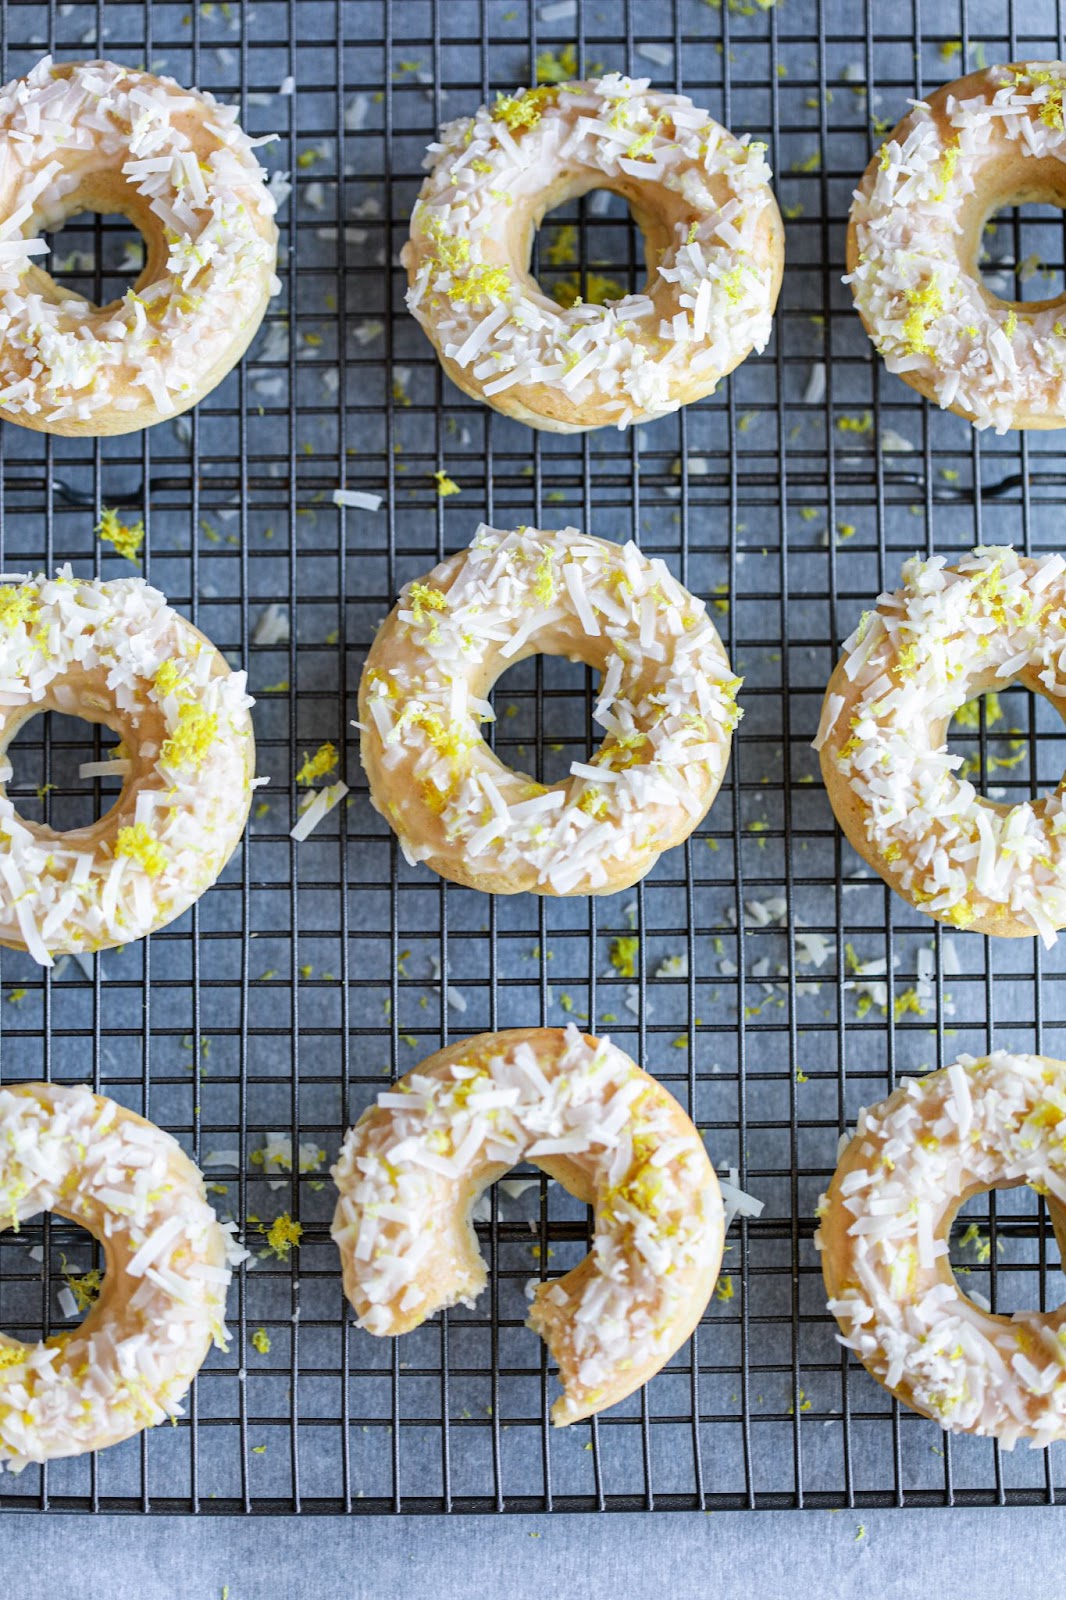 https://www.lgssales.com/recipes/baked-gluten-free-lemon-coconut-donuts/